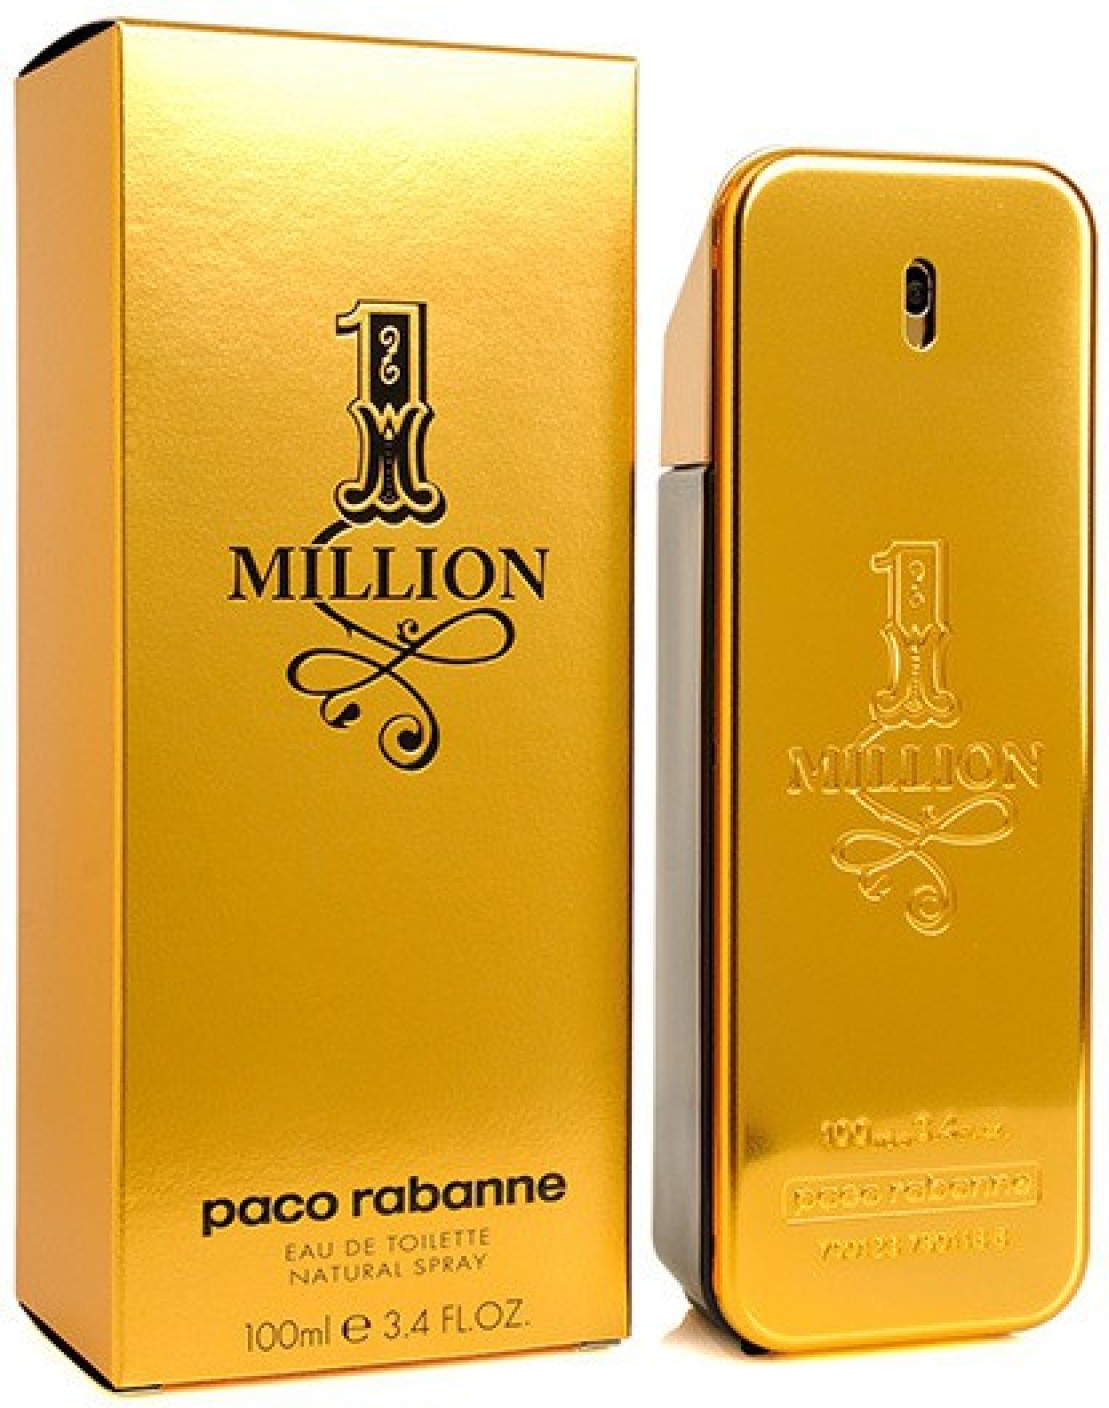 1-one-million-eau-de-toilette-paco-rabanne-original-kutu-sise-parfum-jpeg.757